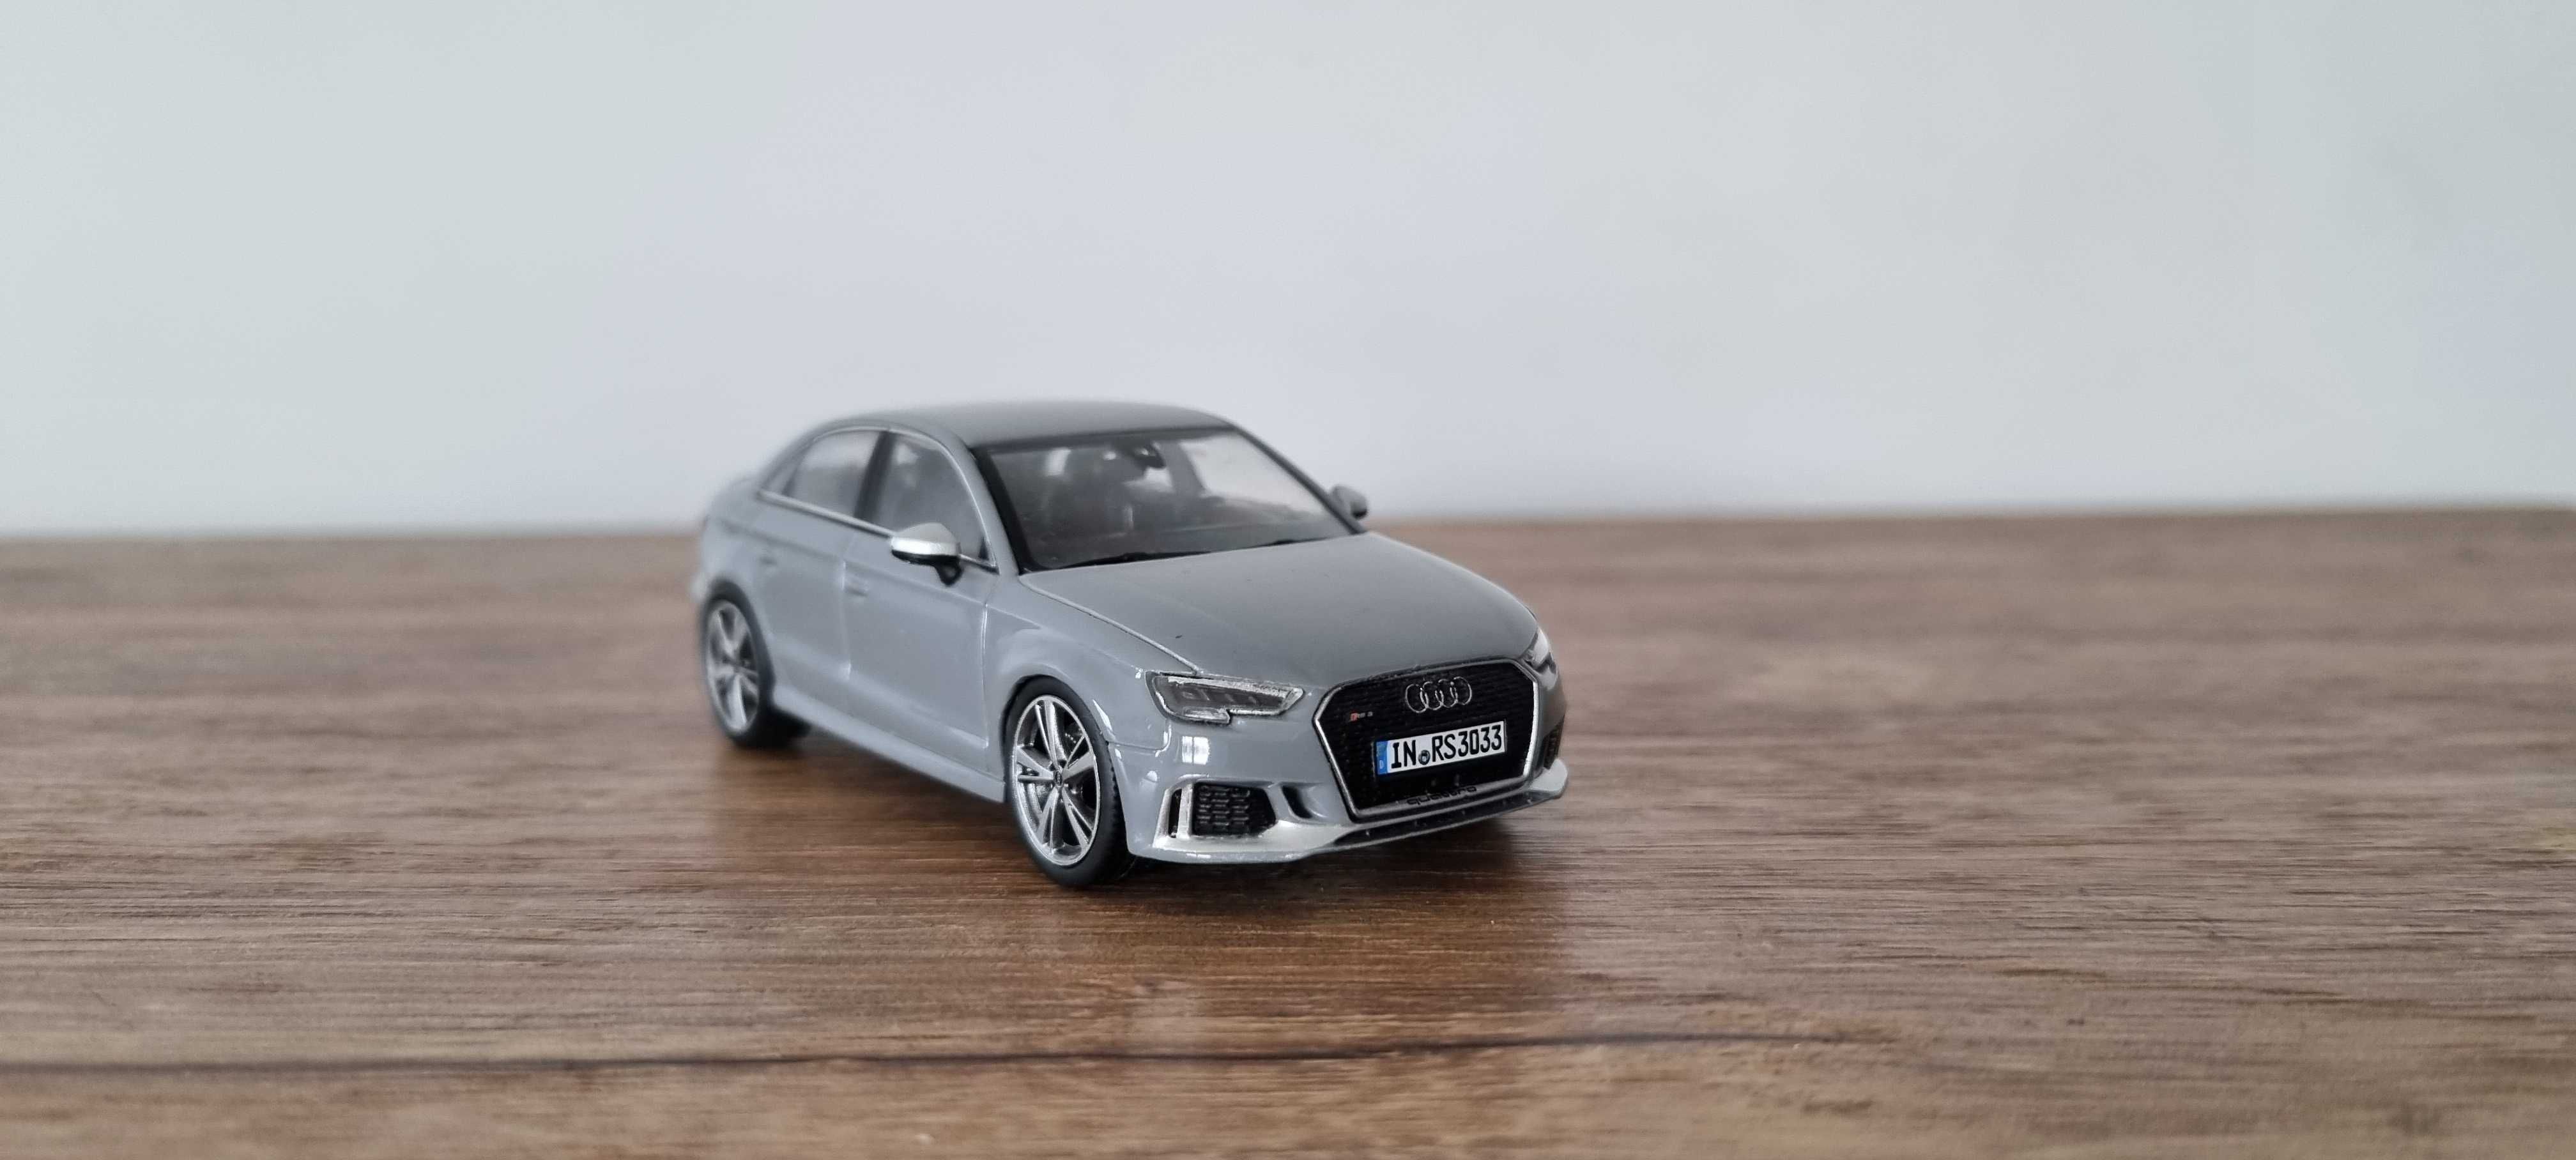 Audi RS3 1:43 I-scale